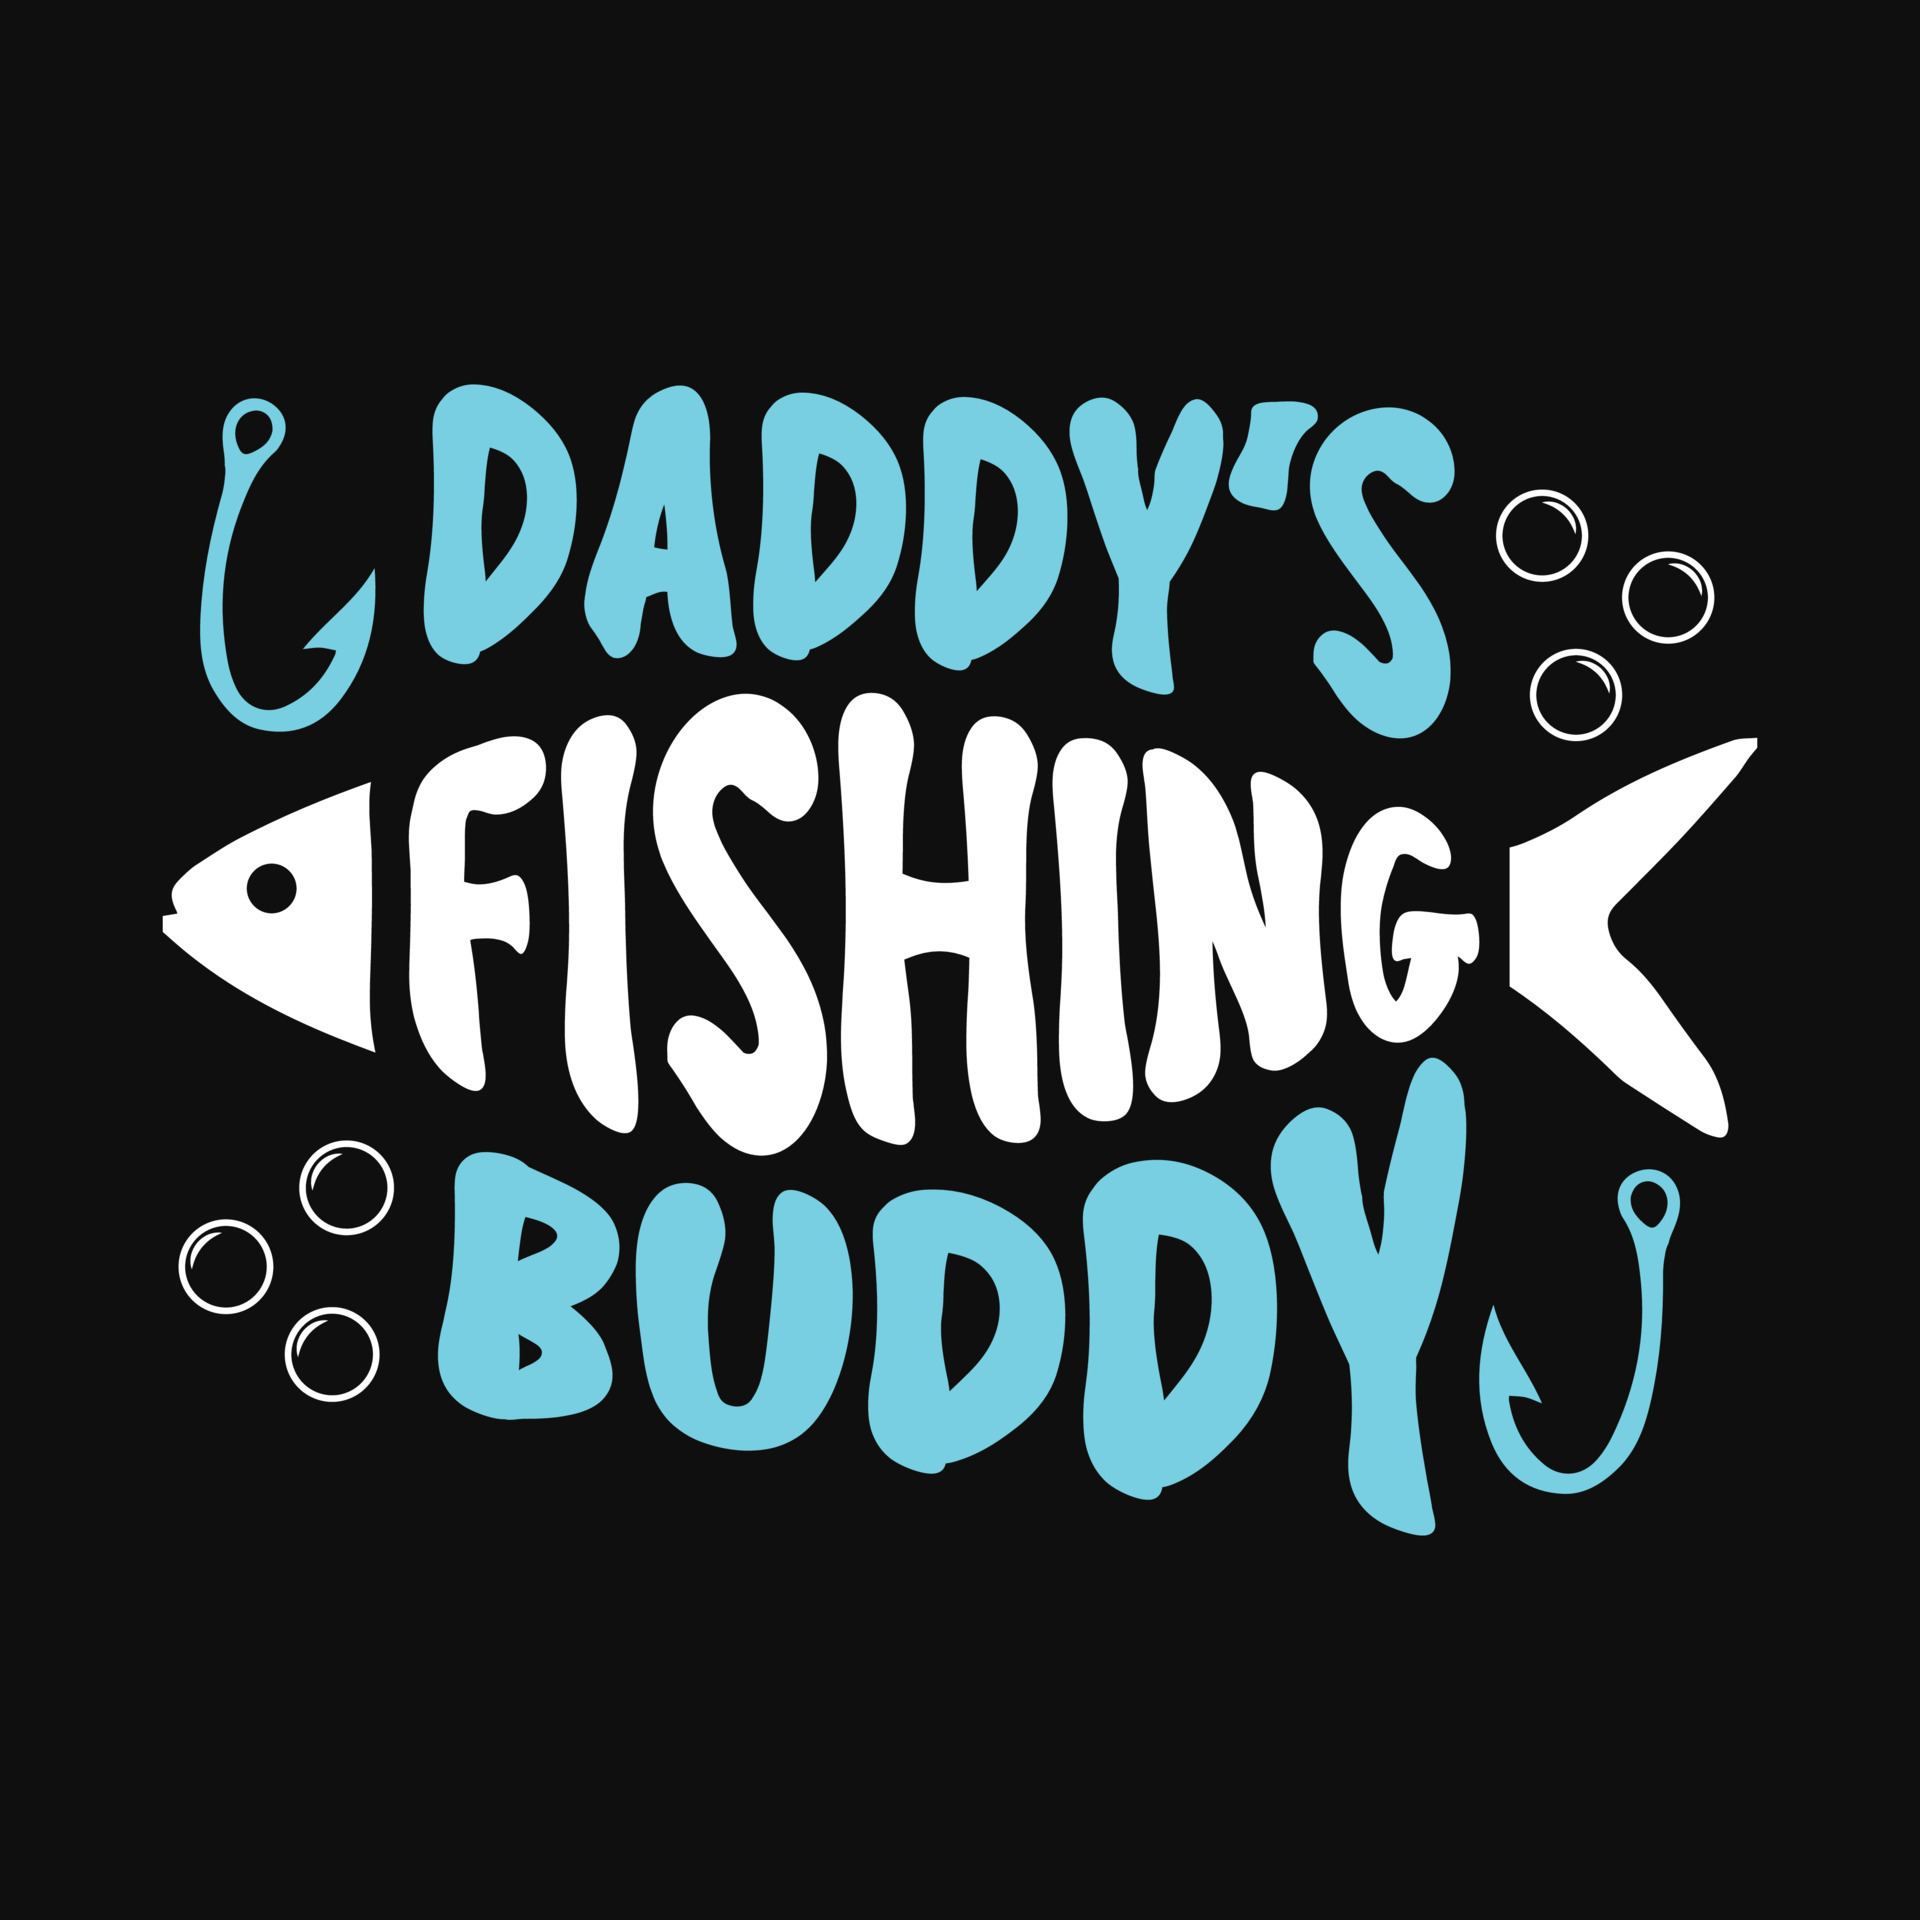 Daddy's fishing buddy - fisherman, boat, fish vector, vintage